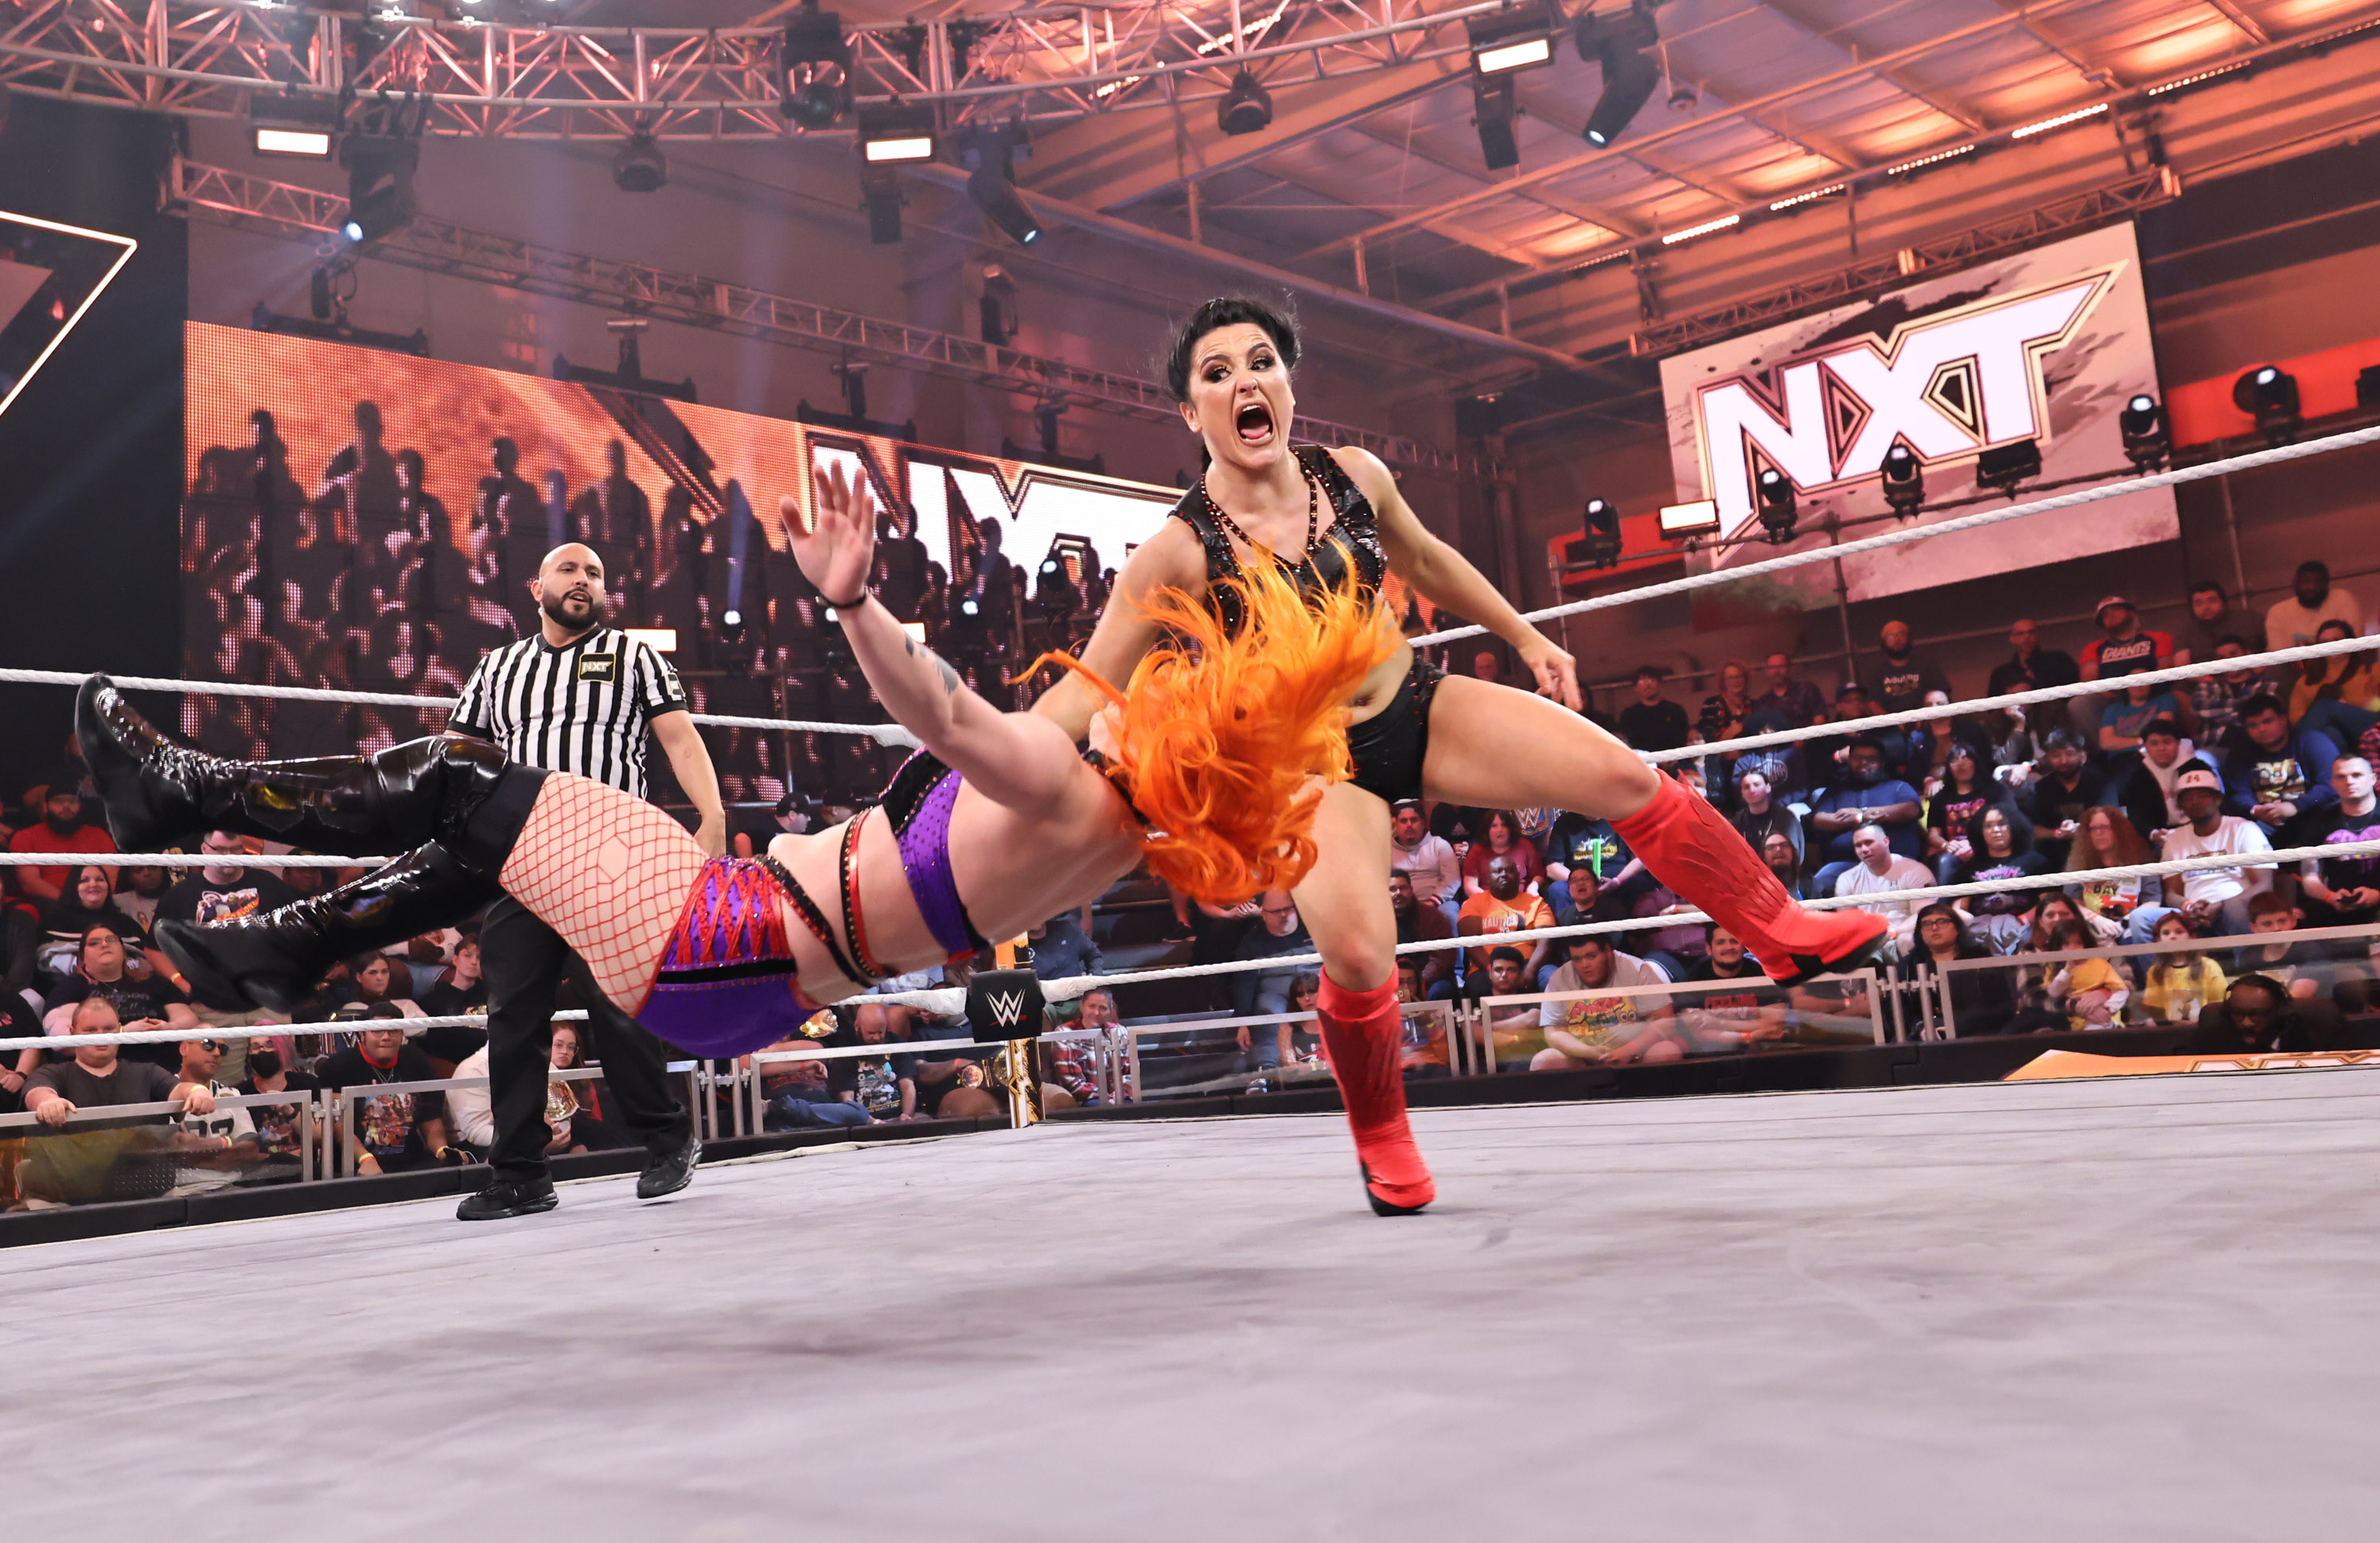 Lyra Valkyria Beats Becky Lynch, Wins NXT Women's Title On NXT Halloween  Havoc